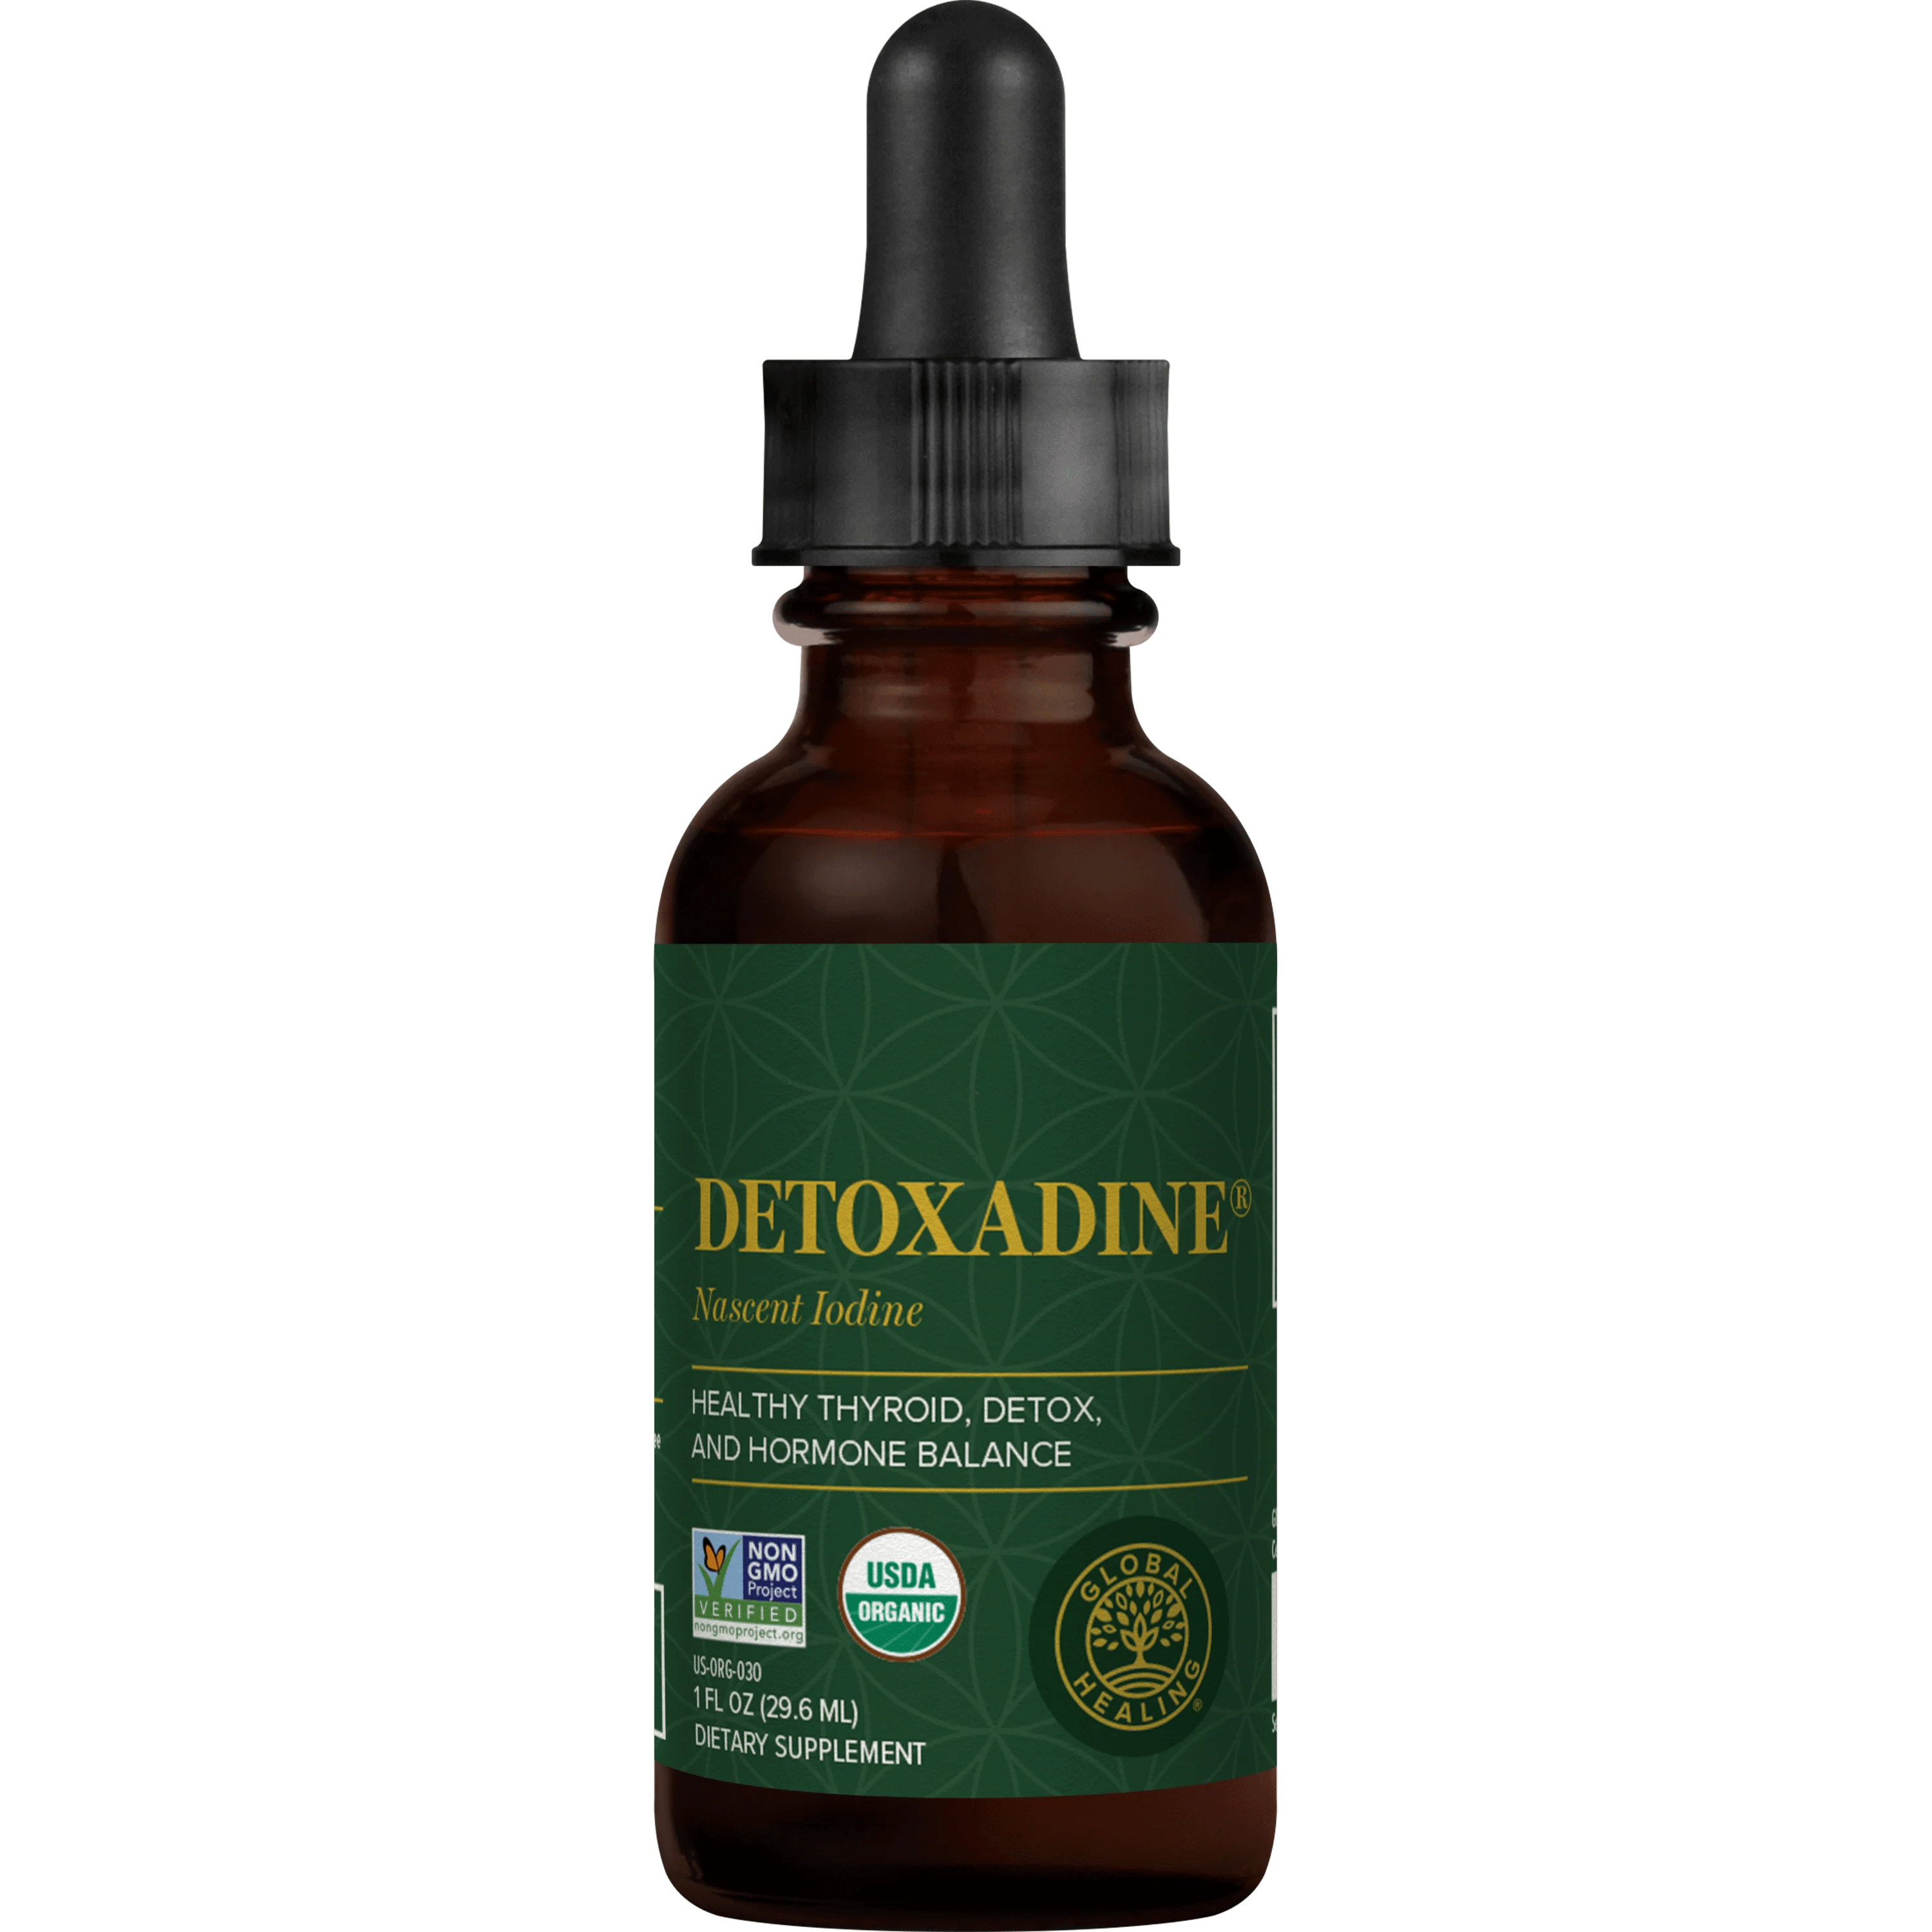 Detoxadine Bottle from Global Healing Thyroid Health Bundle